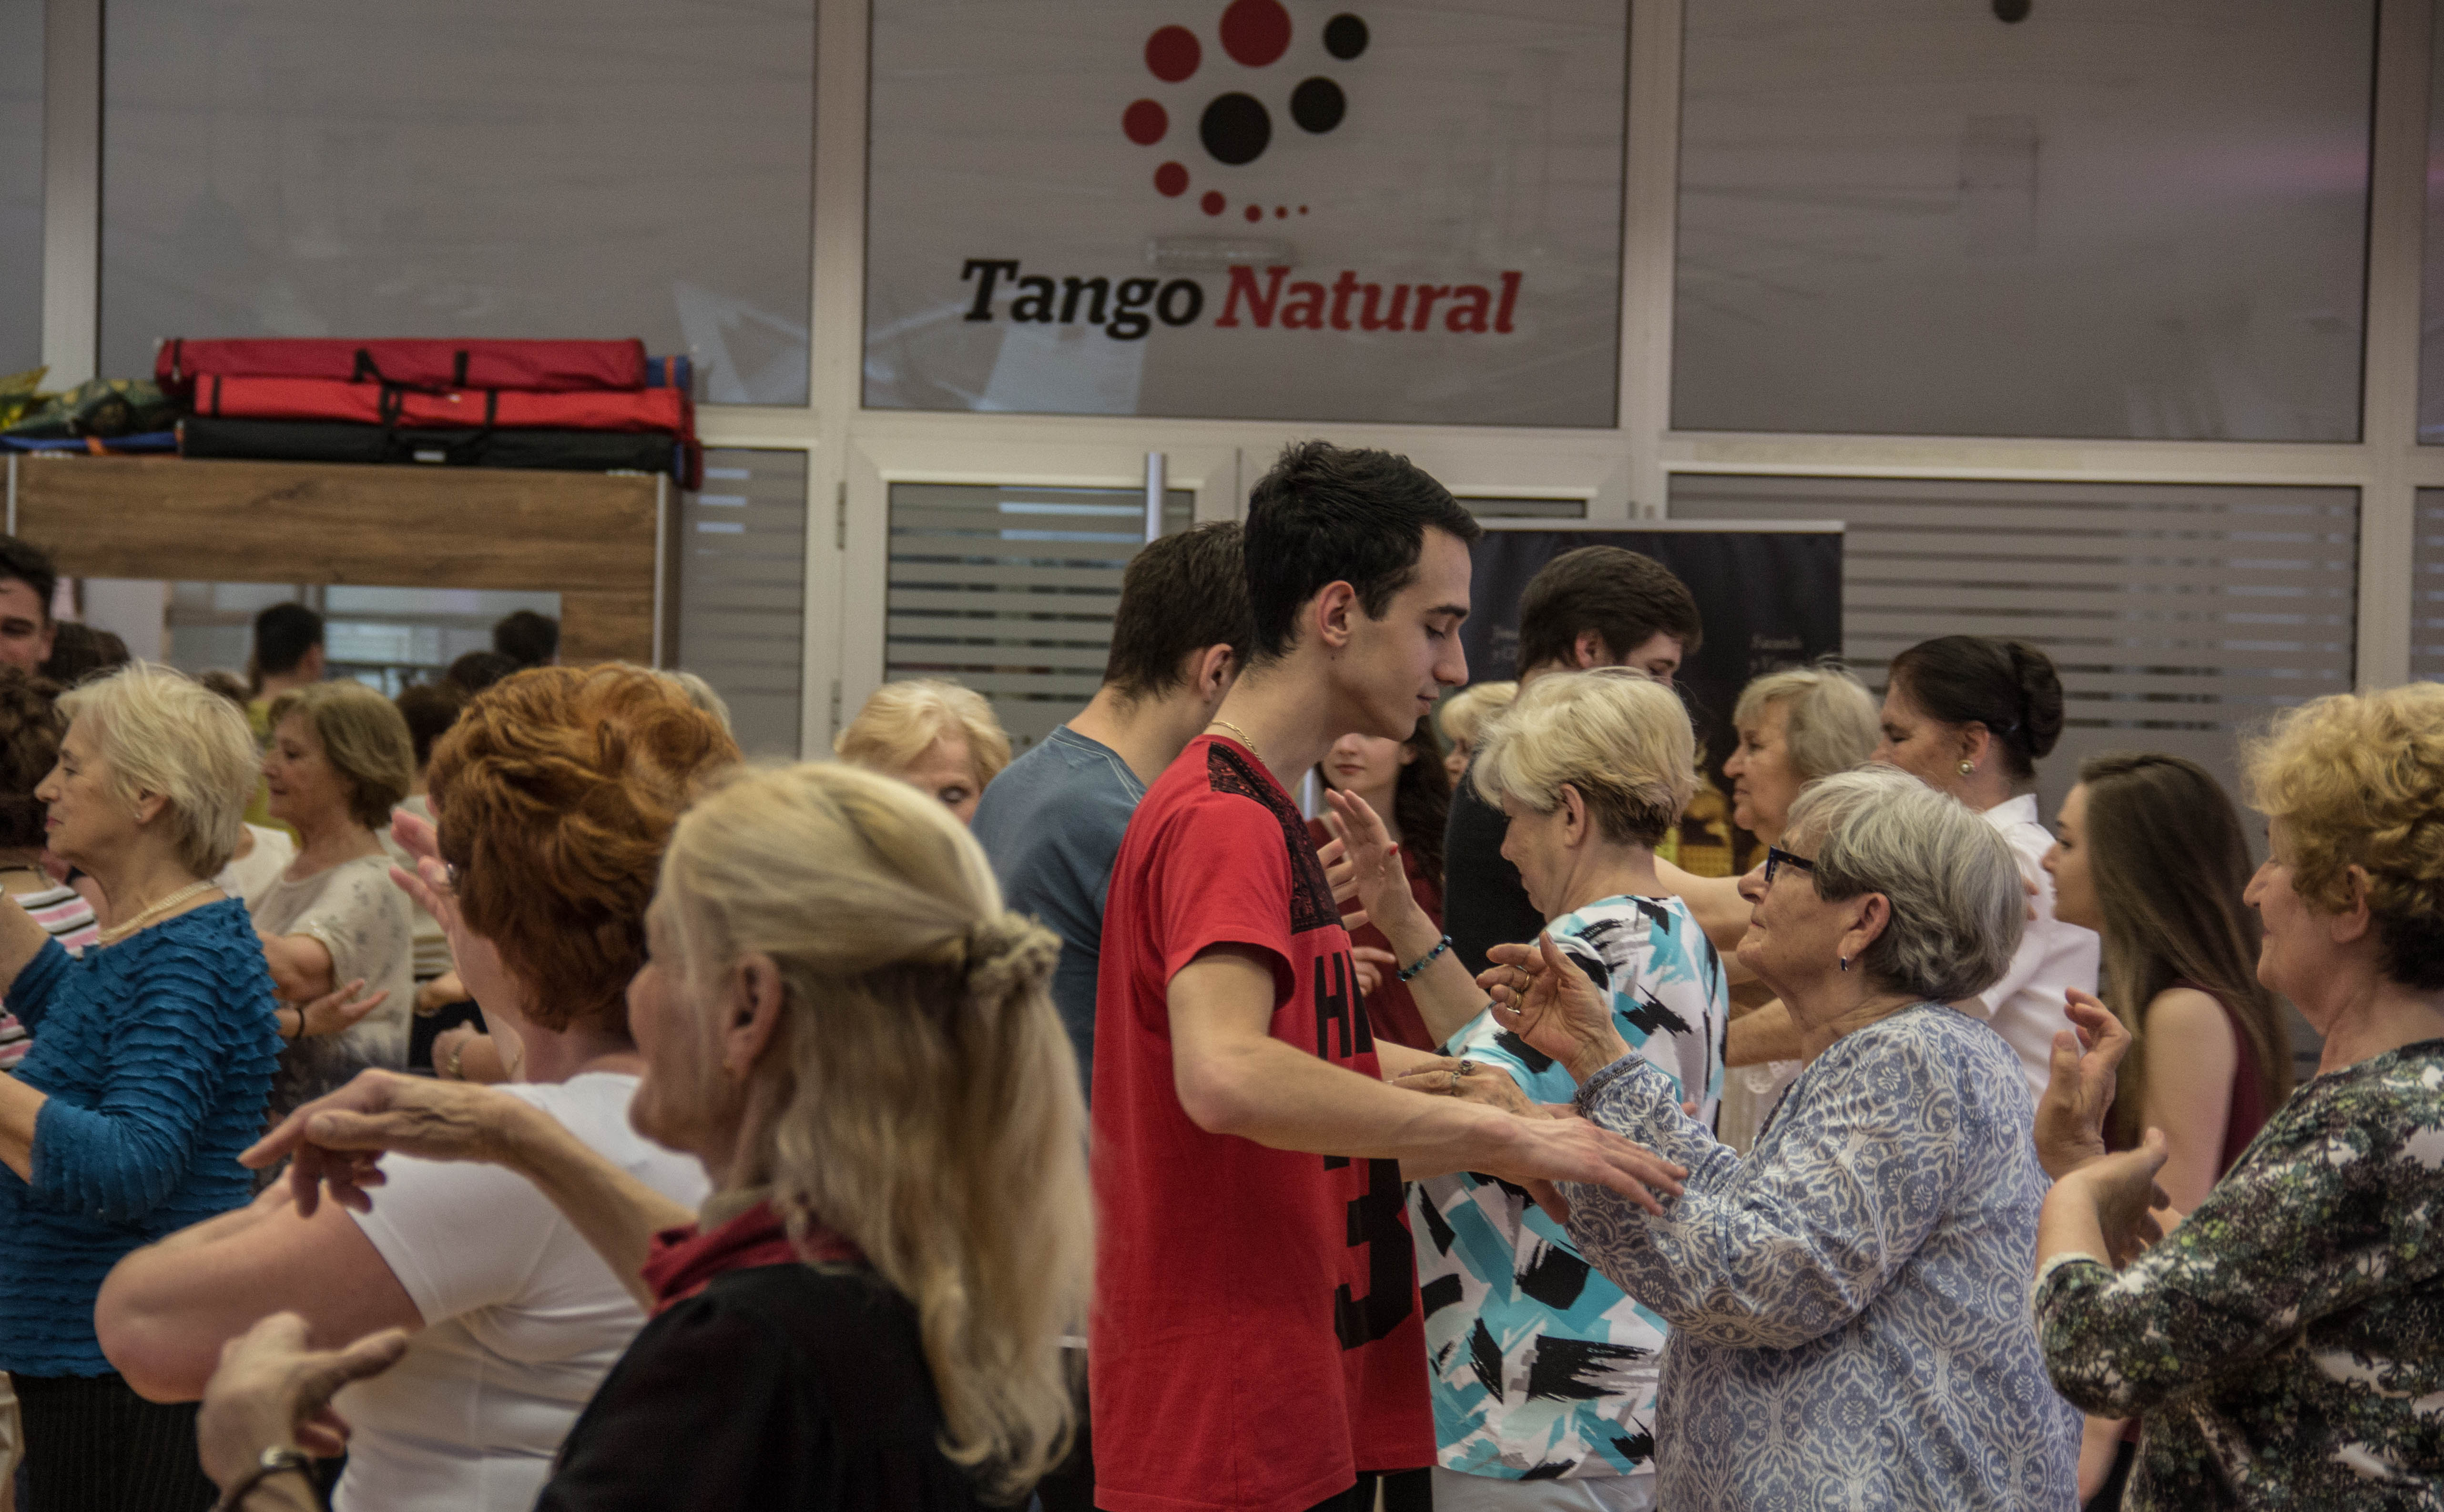 Međugeneracijska radionica tango plesa